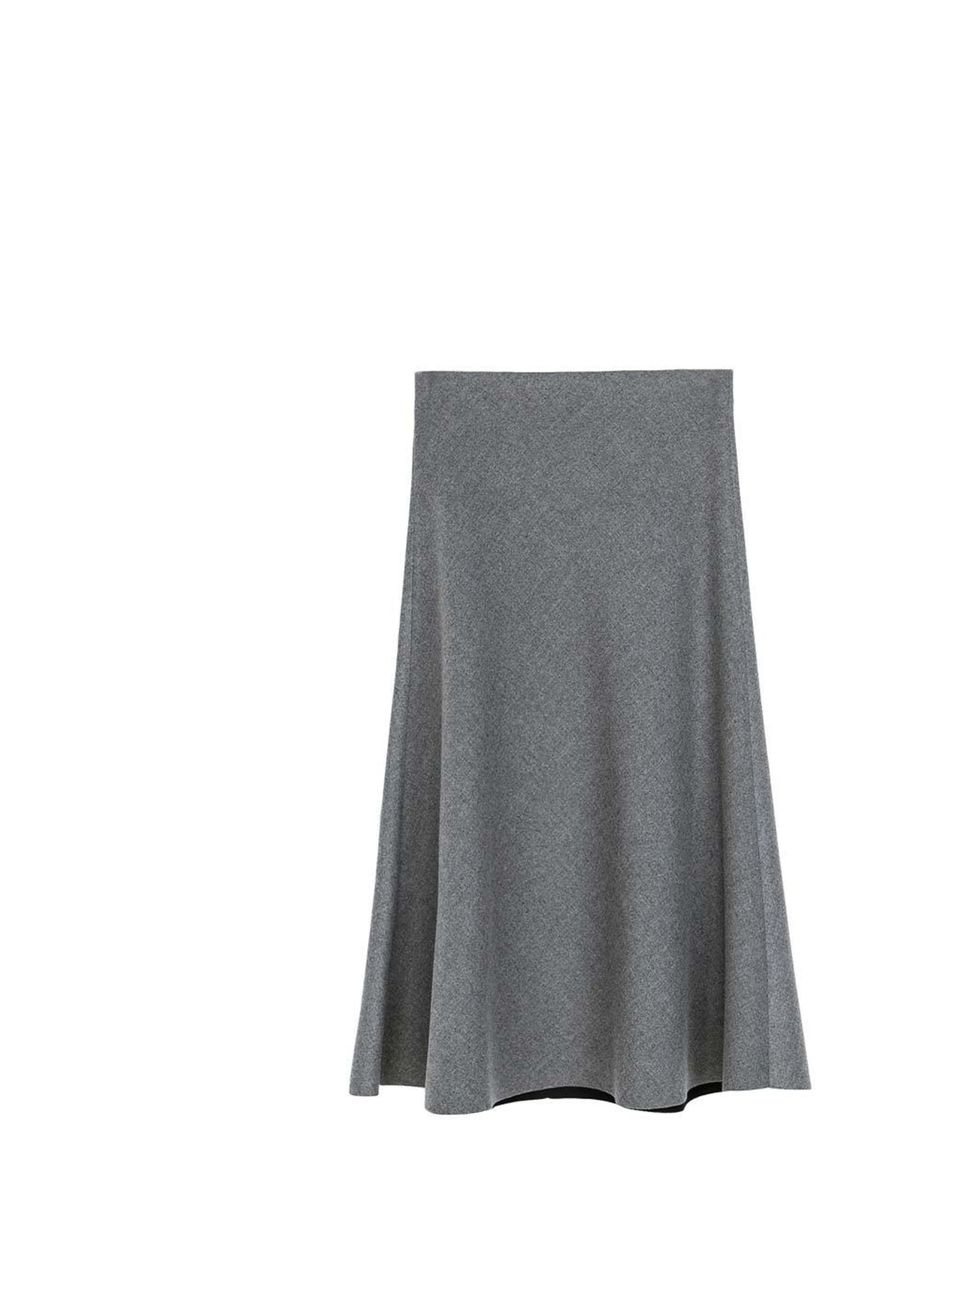 <p>Minimalist lines? Below the knee? Uniform grey? Check, check, and check - that's three of this season's trends in one high street skirt...</p><p><a href="http://www.zara.com/uk/en/woman/skirts/high-waist-skirt-c269188p1554521.html">Zara</a> Skirt, £39.